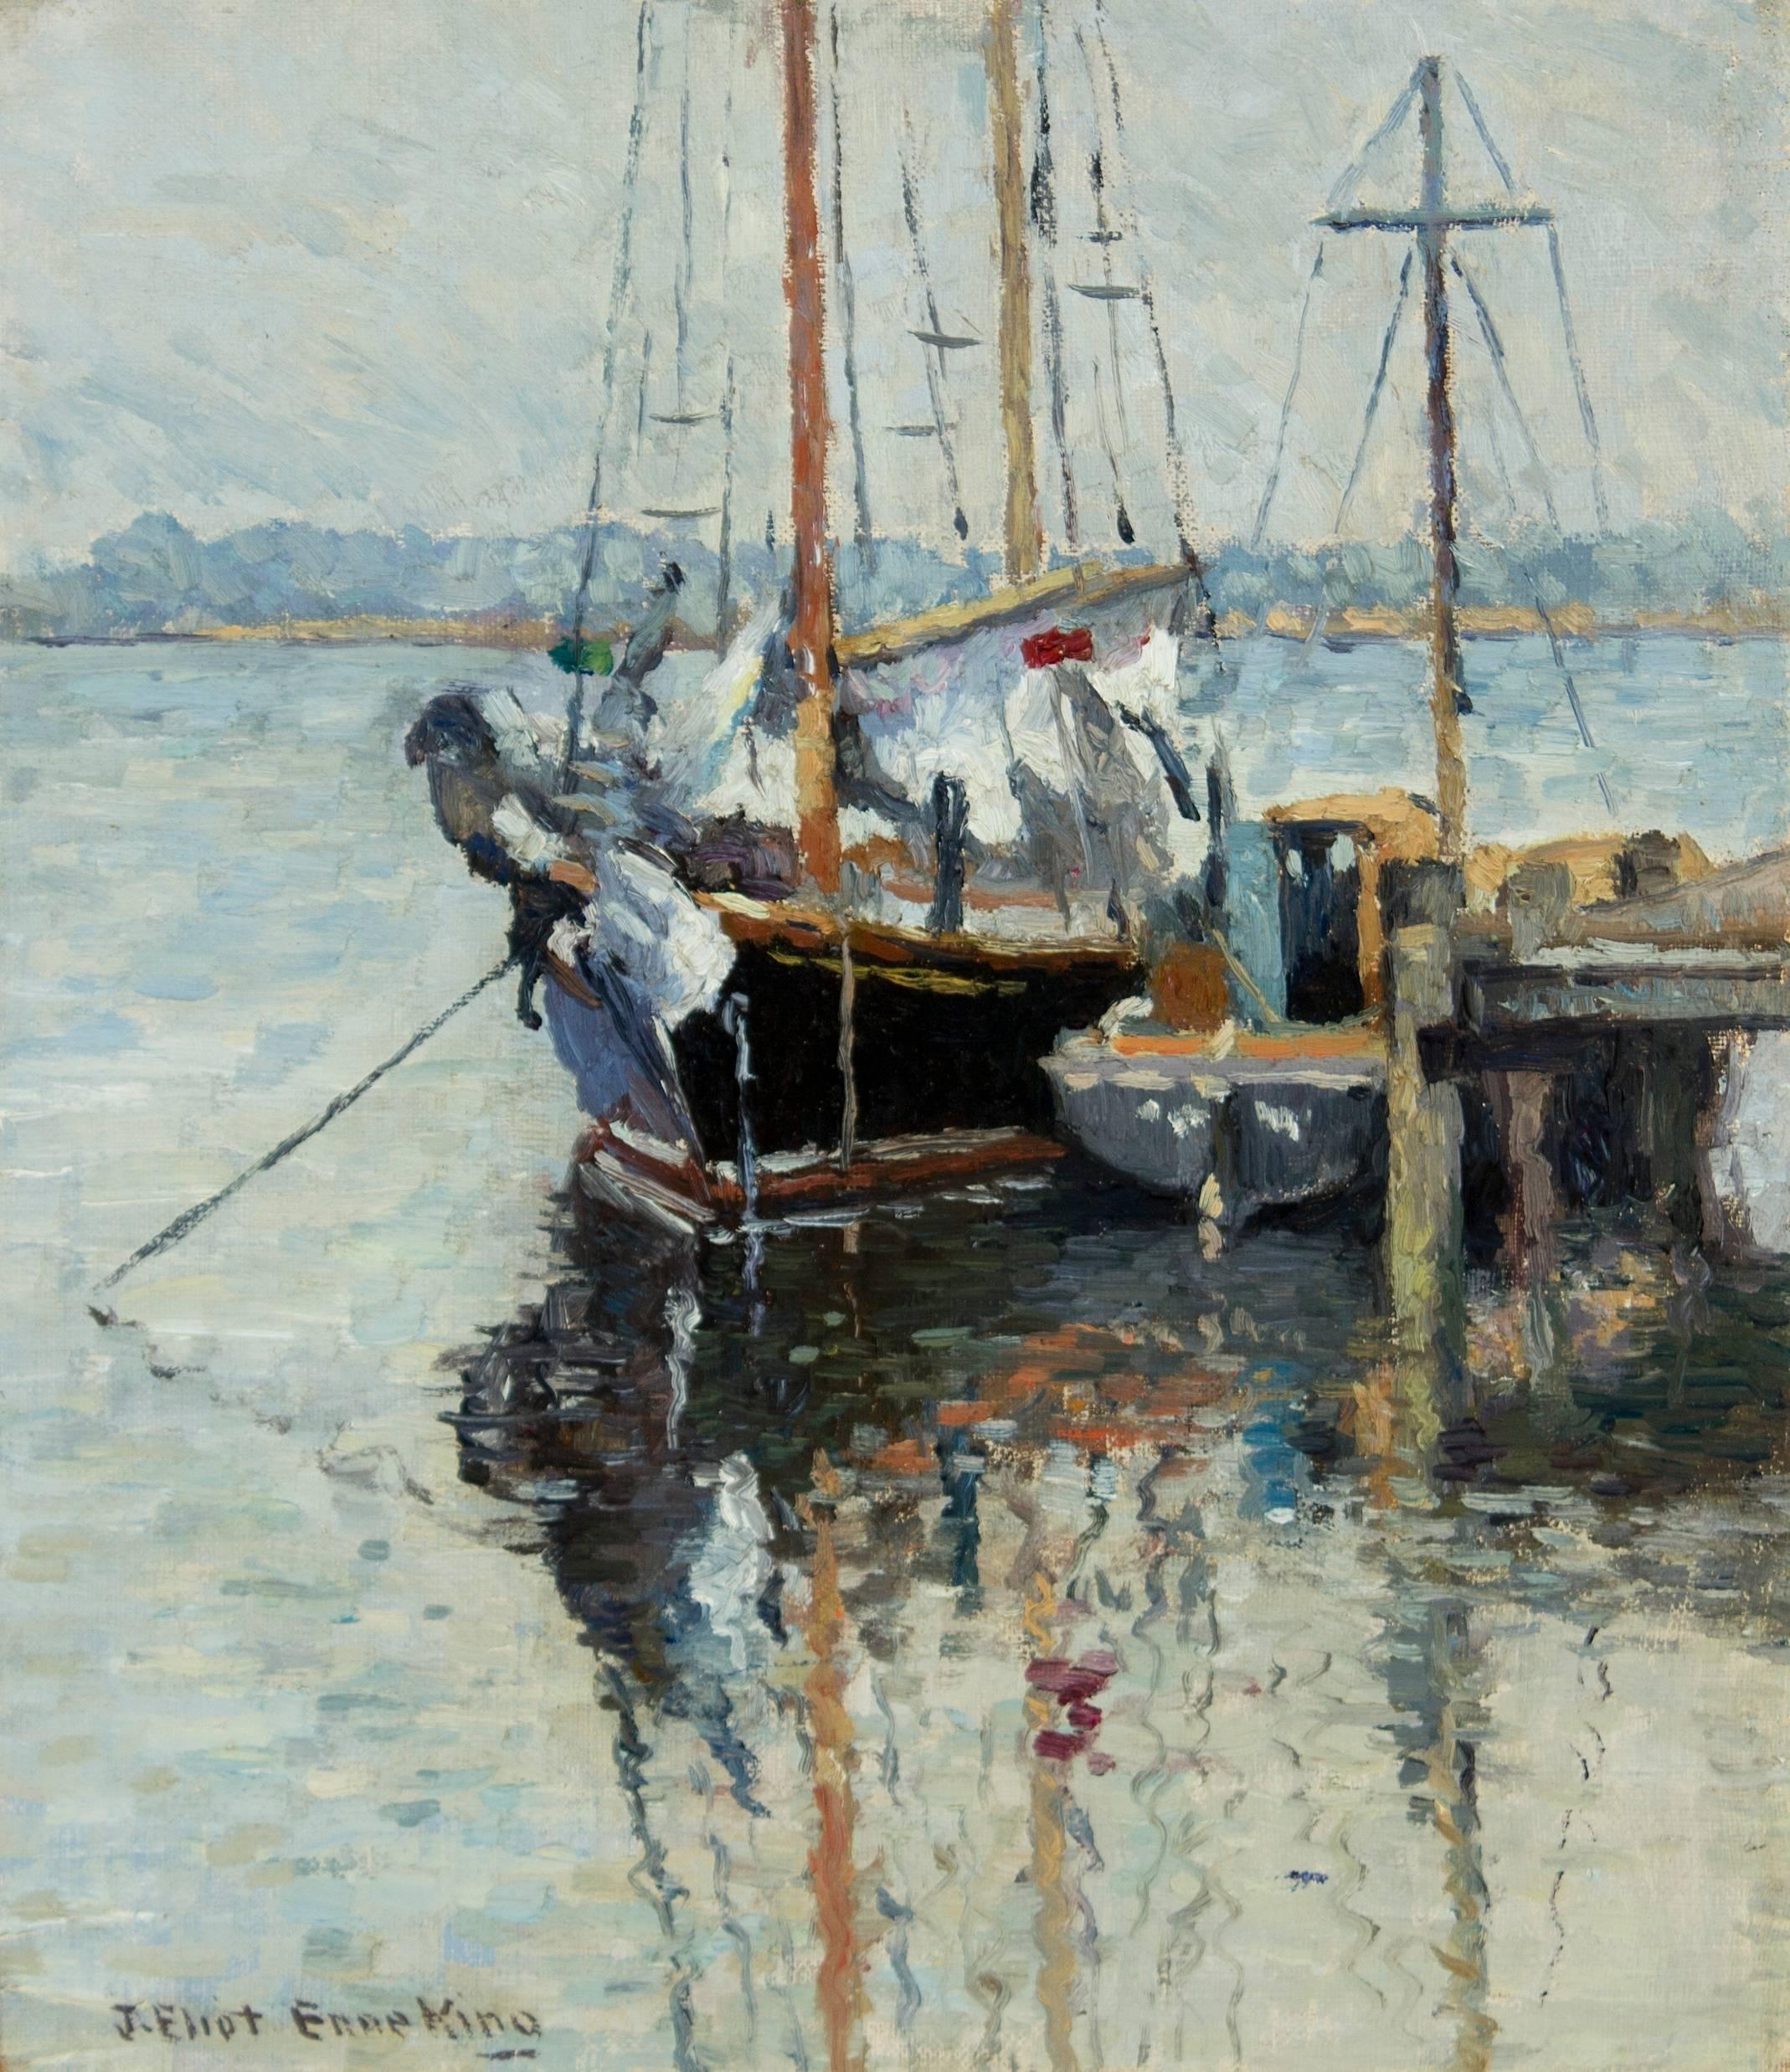 Boats, Mystic, Connecticut - Painting by Joseph Eliot Enneking